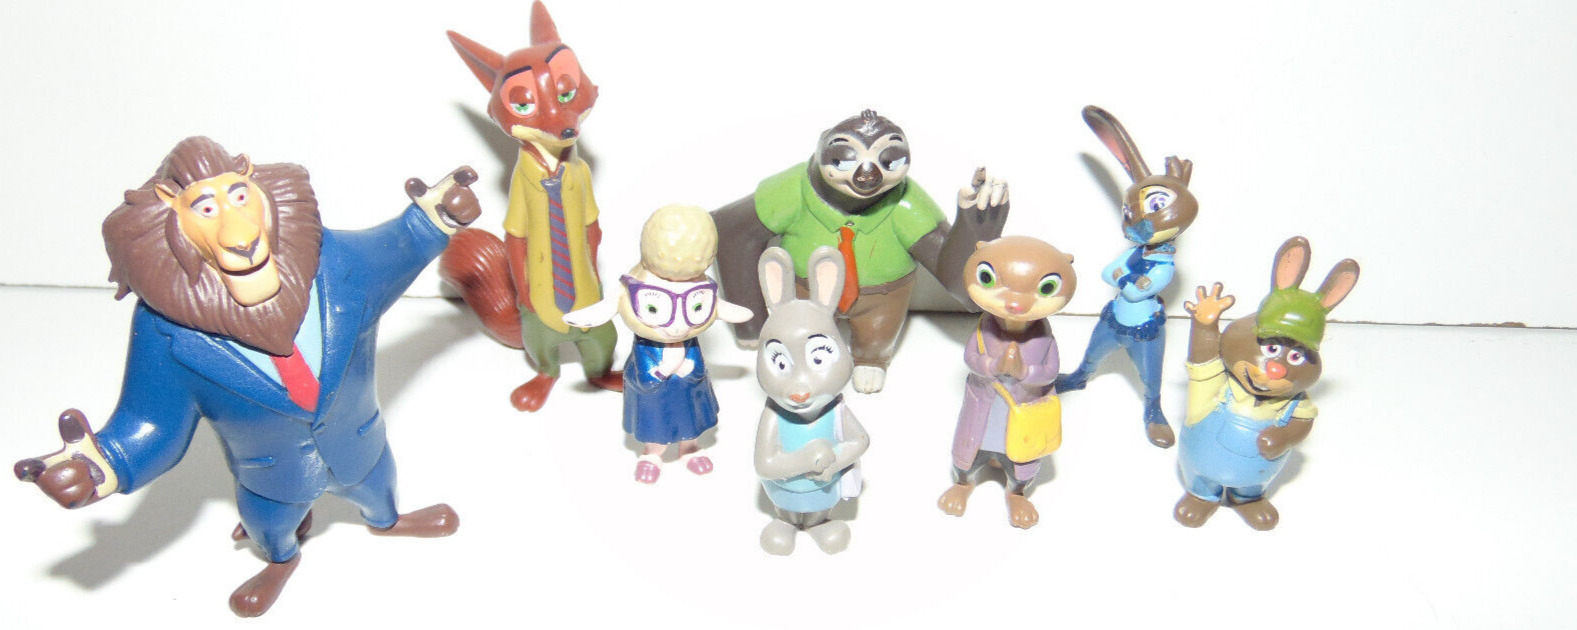 8PCS/SET Disney Zootopia Nick Judy Flash Mini Action Figures PVC Toys Dolls